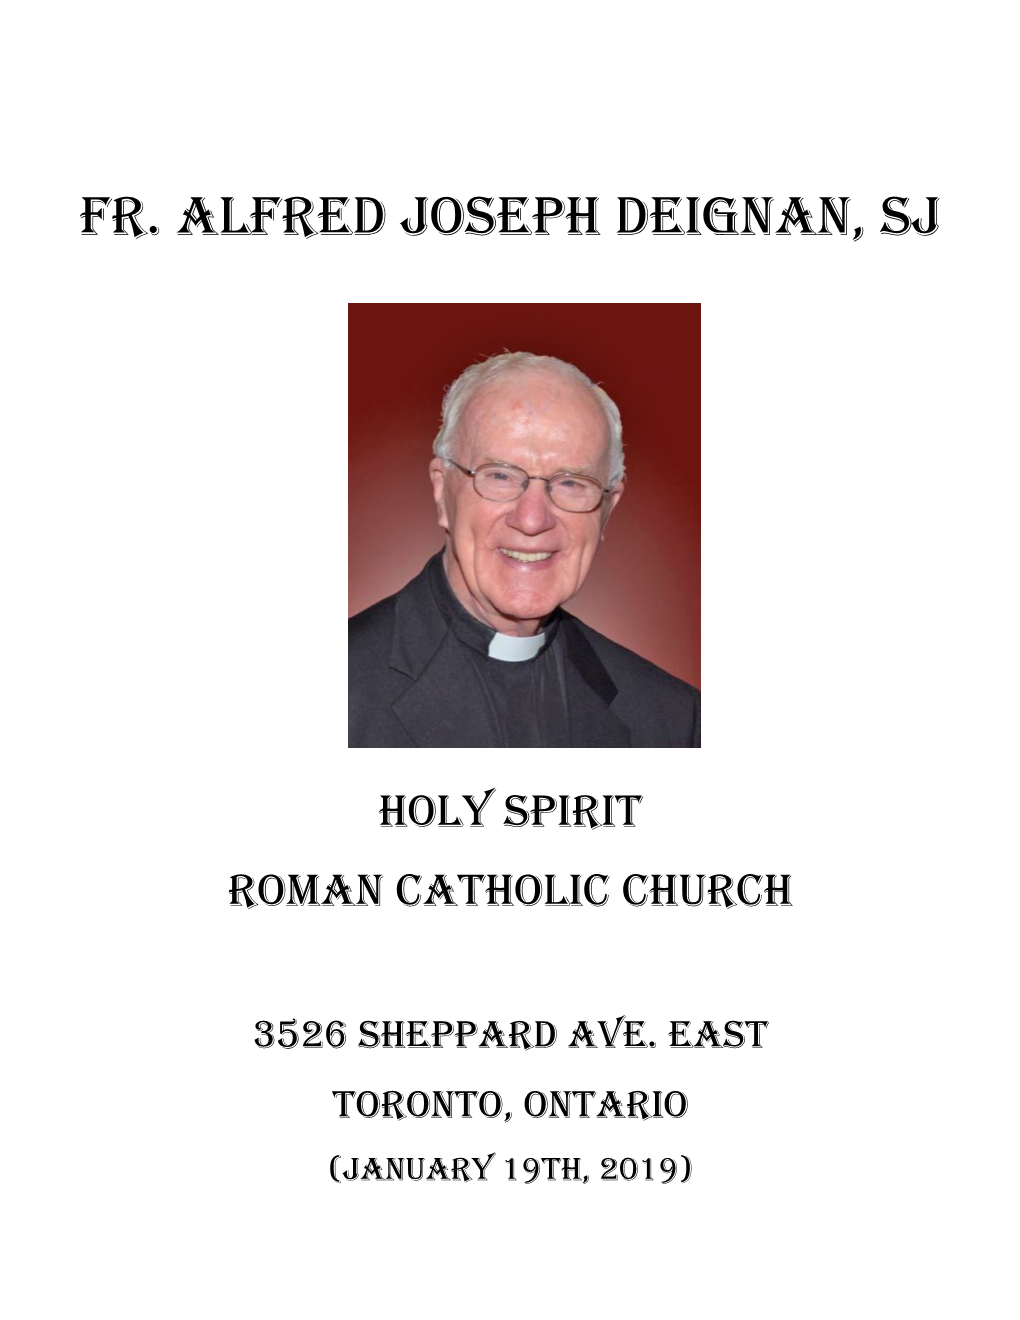 Fr. ALFRED JOSEPH DEIGNAN, Sj